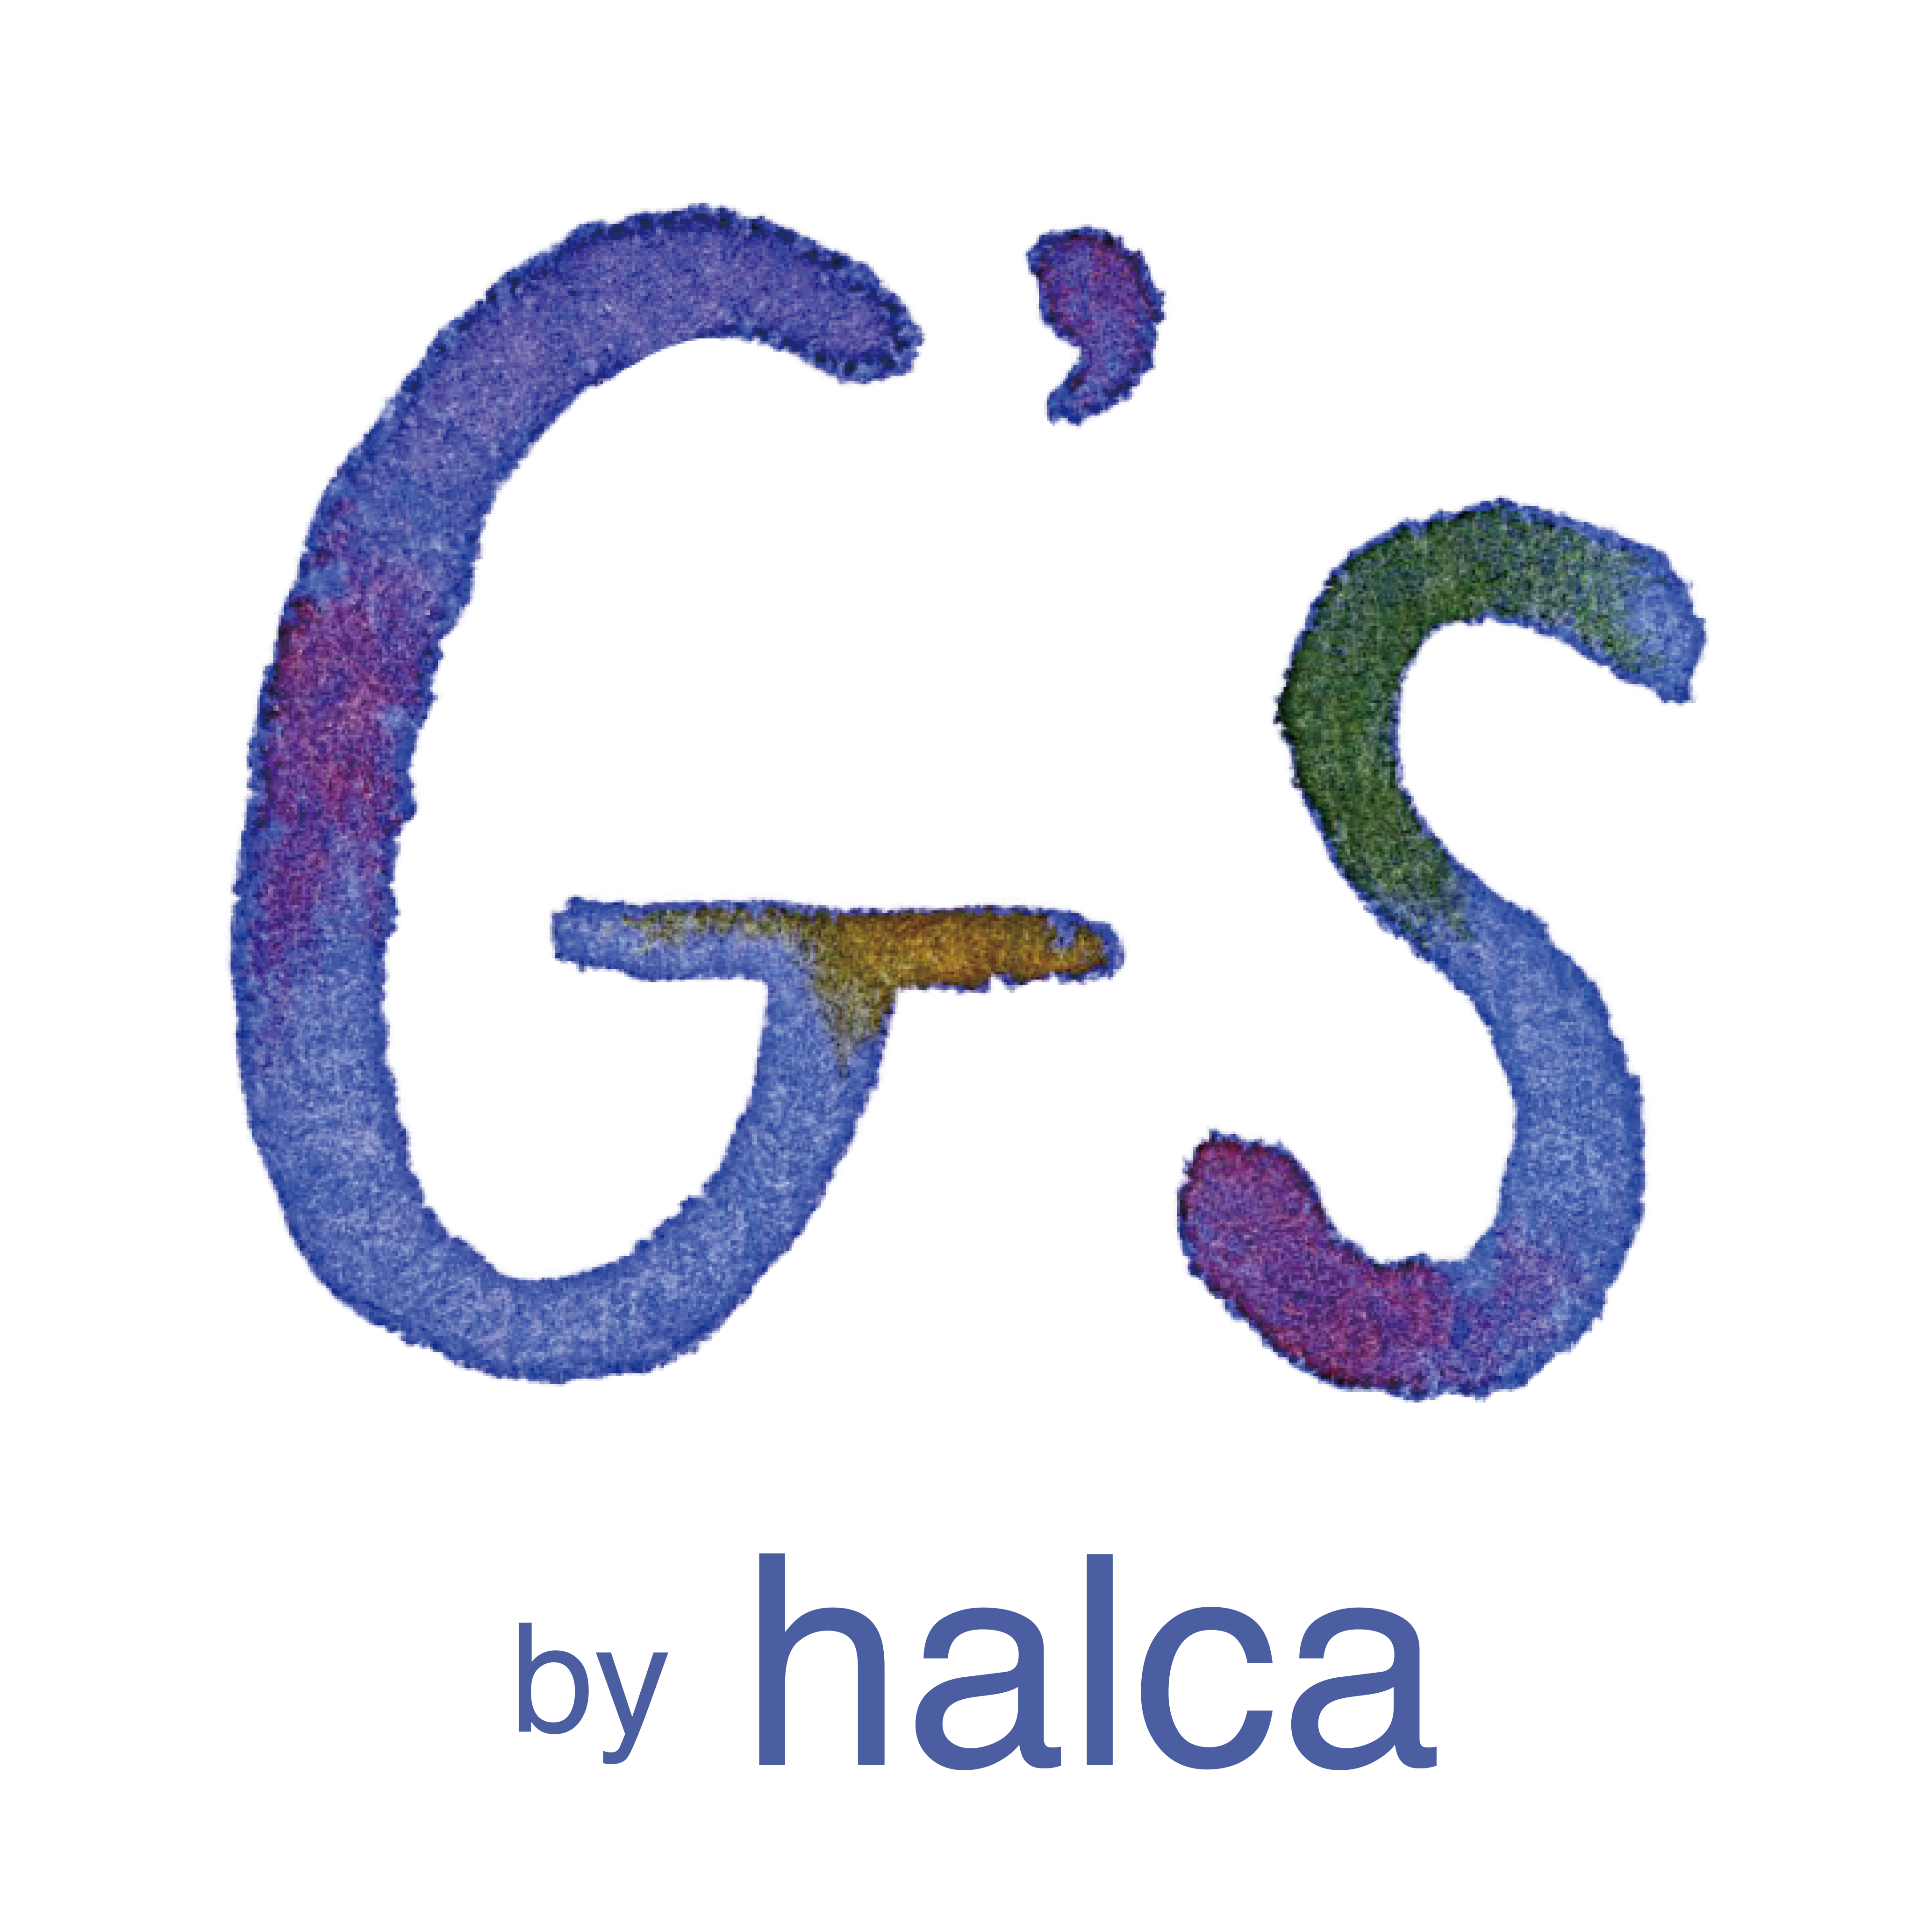 G's by halca